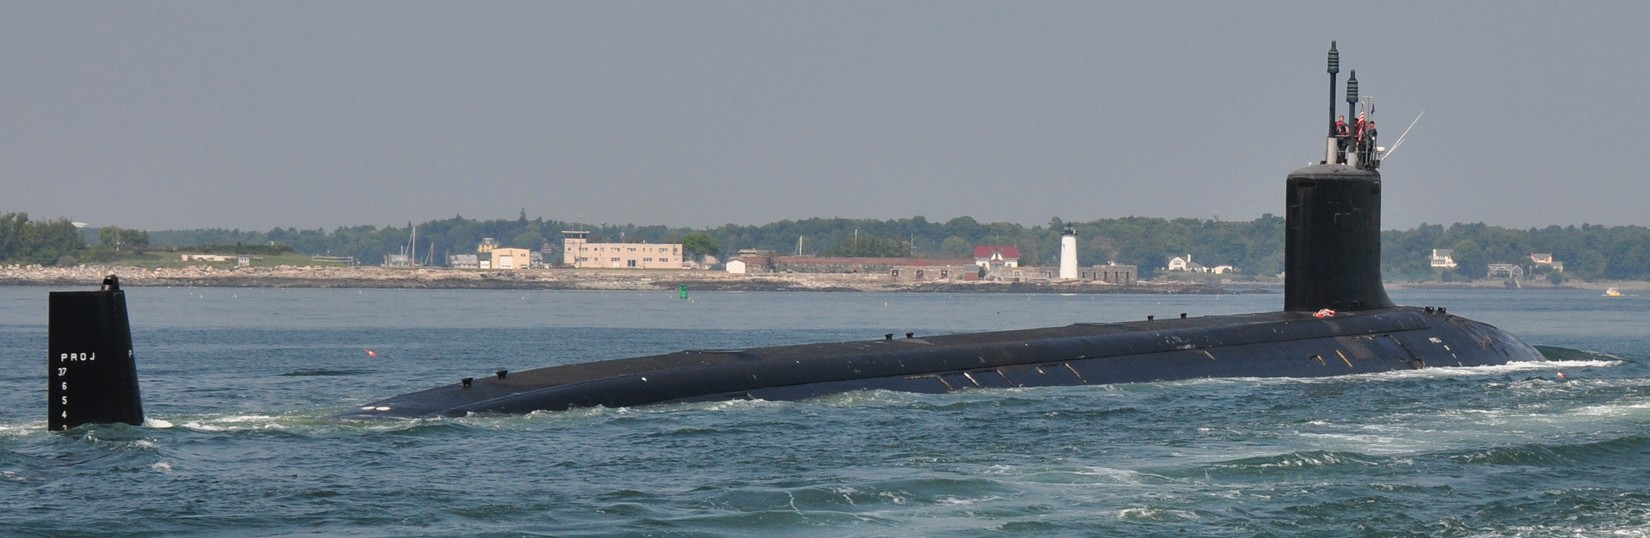 ssn-774 uss virginia attack submarine navy 2010 13 portsmouth naval shipyard kittery maine